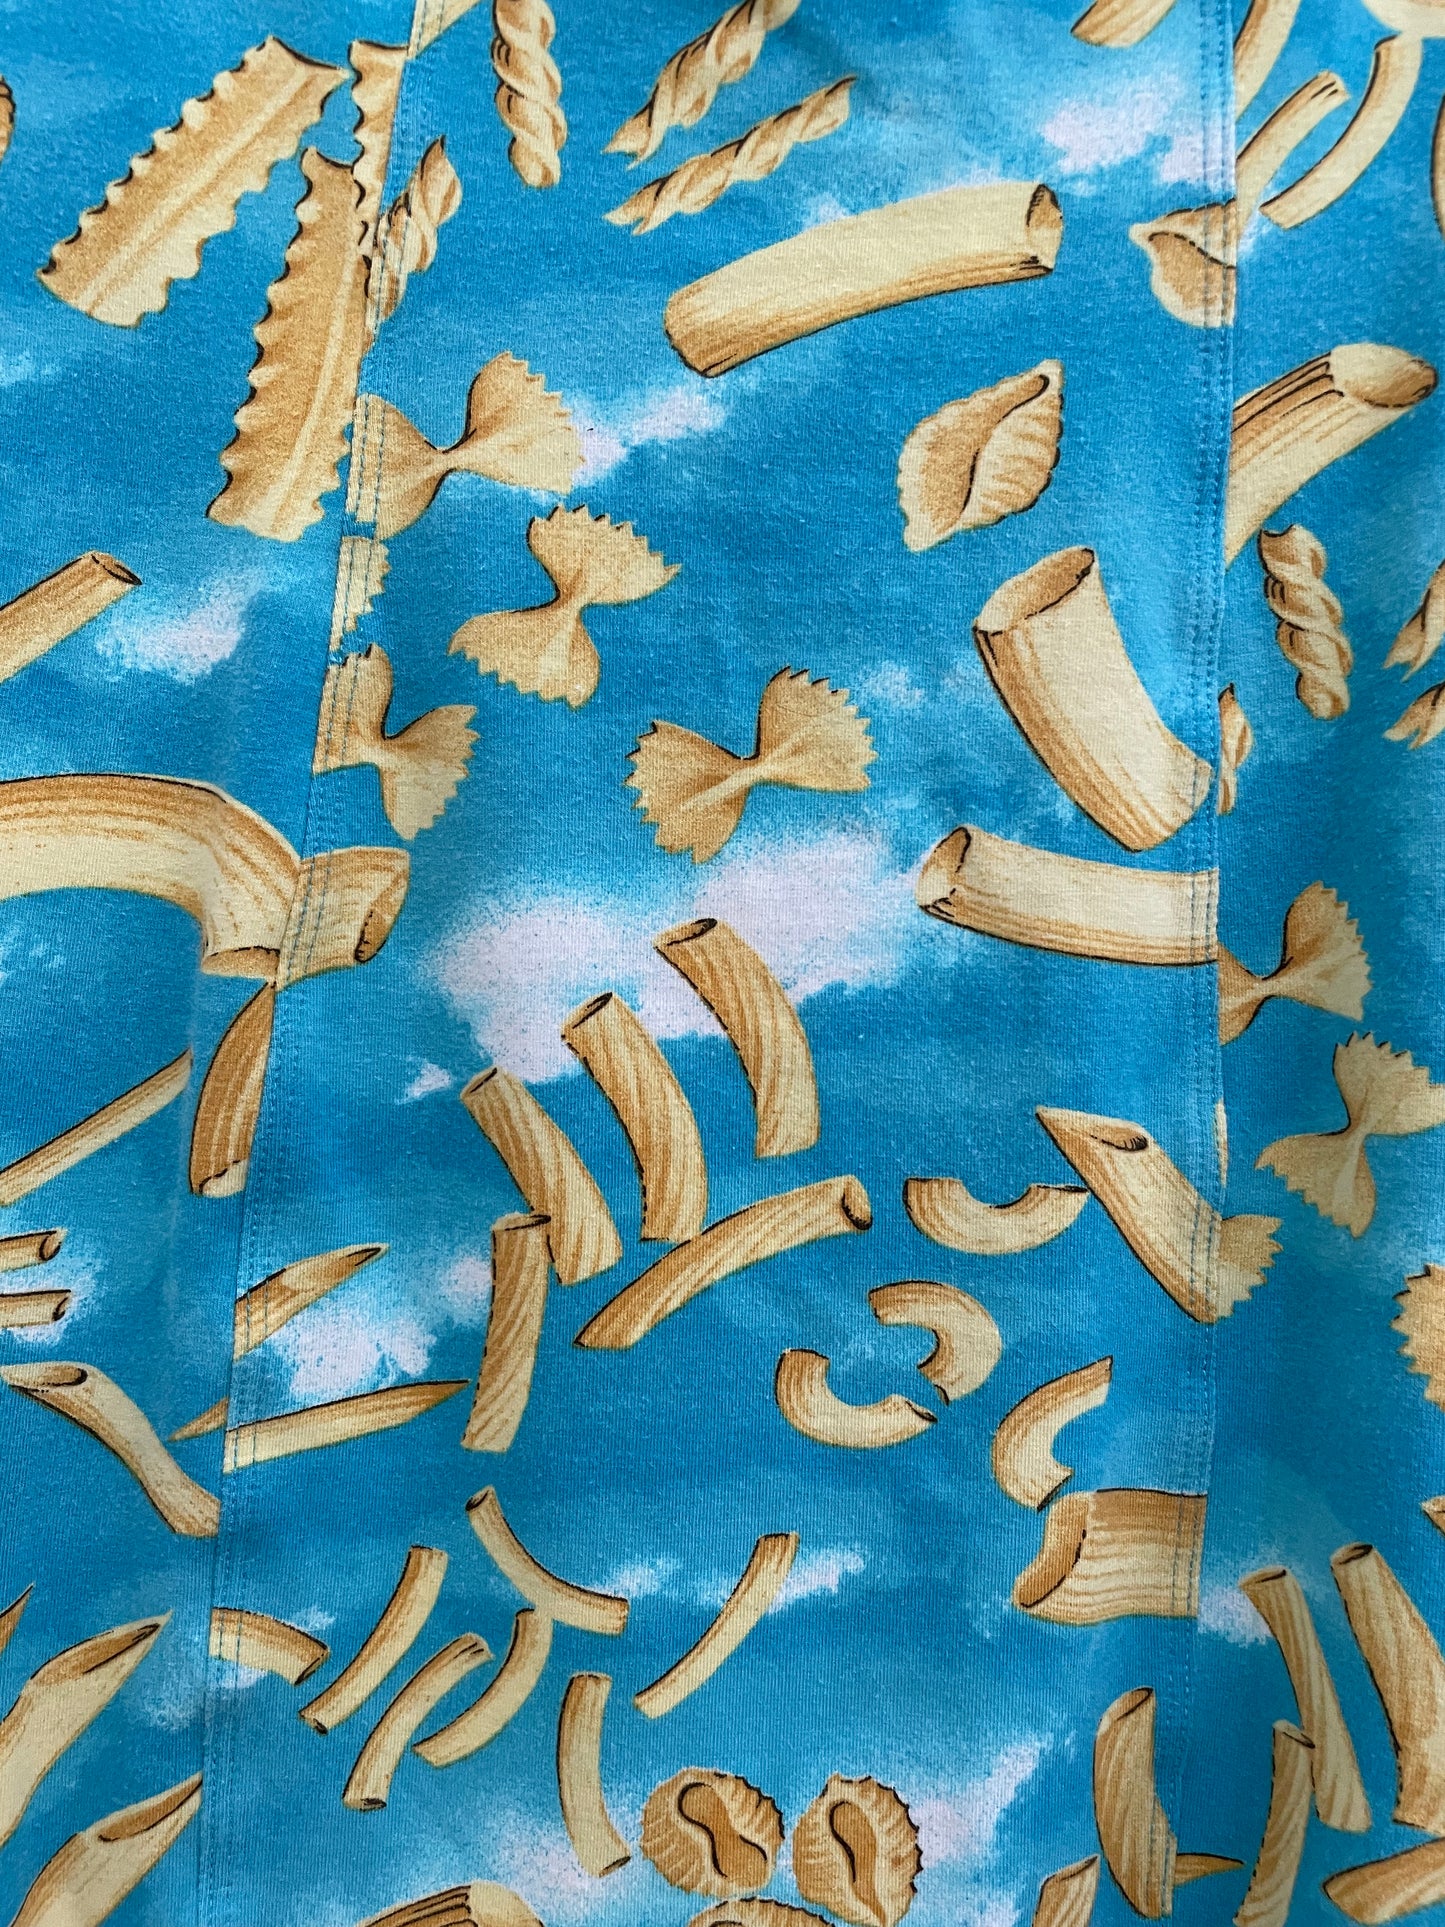 Fendi 90's surrealist pasta mini dress